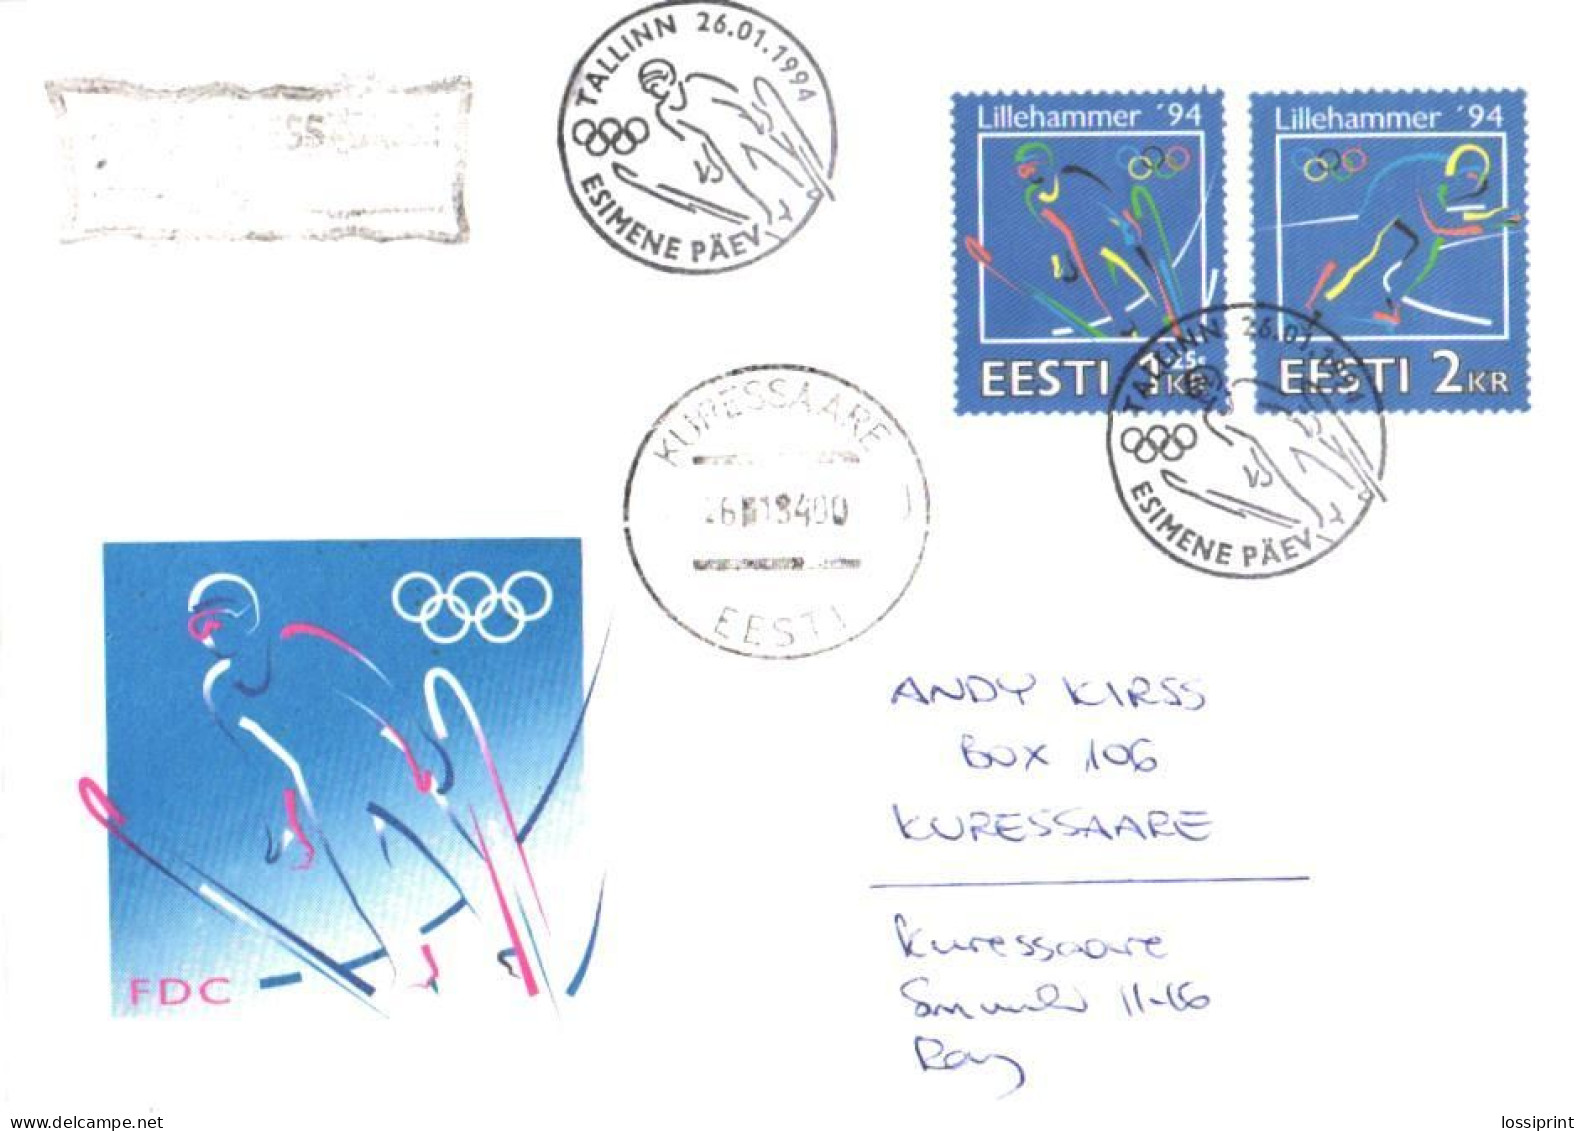 Estonia:FDC, Lillehammer Olympic Games, Registered Letter, 1994 - Estonia